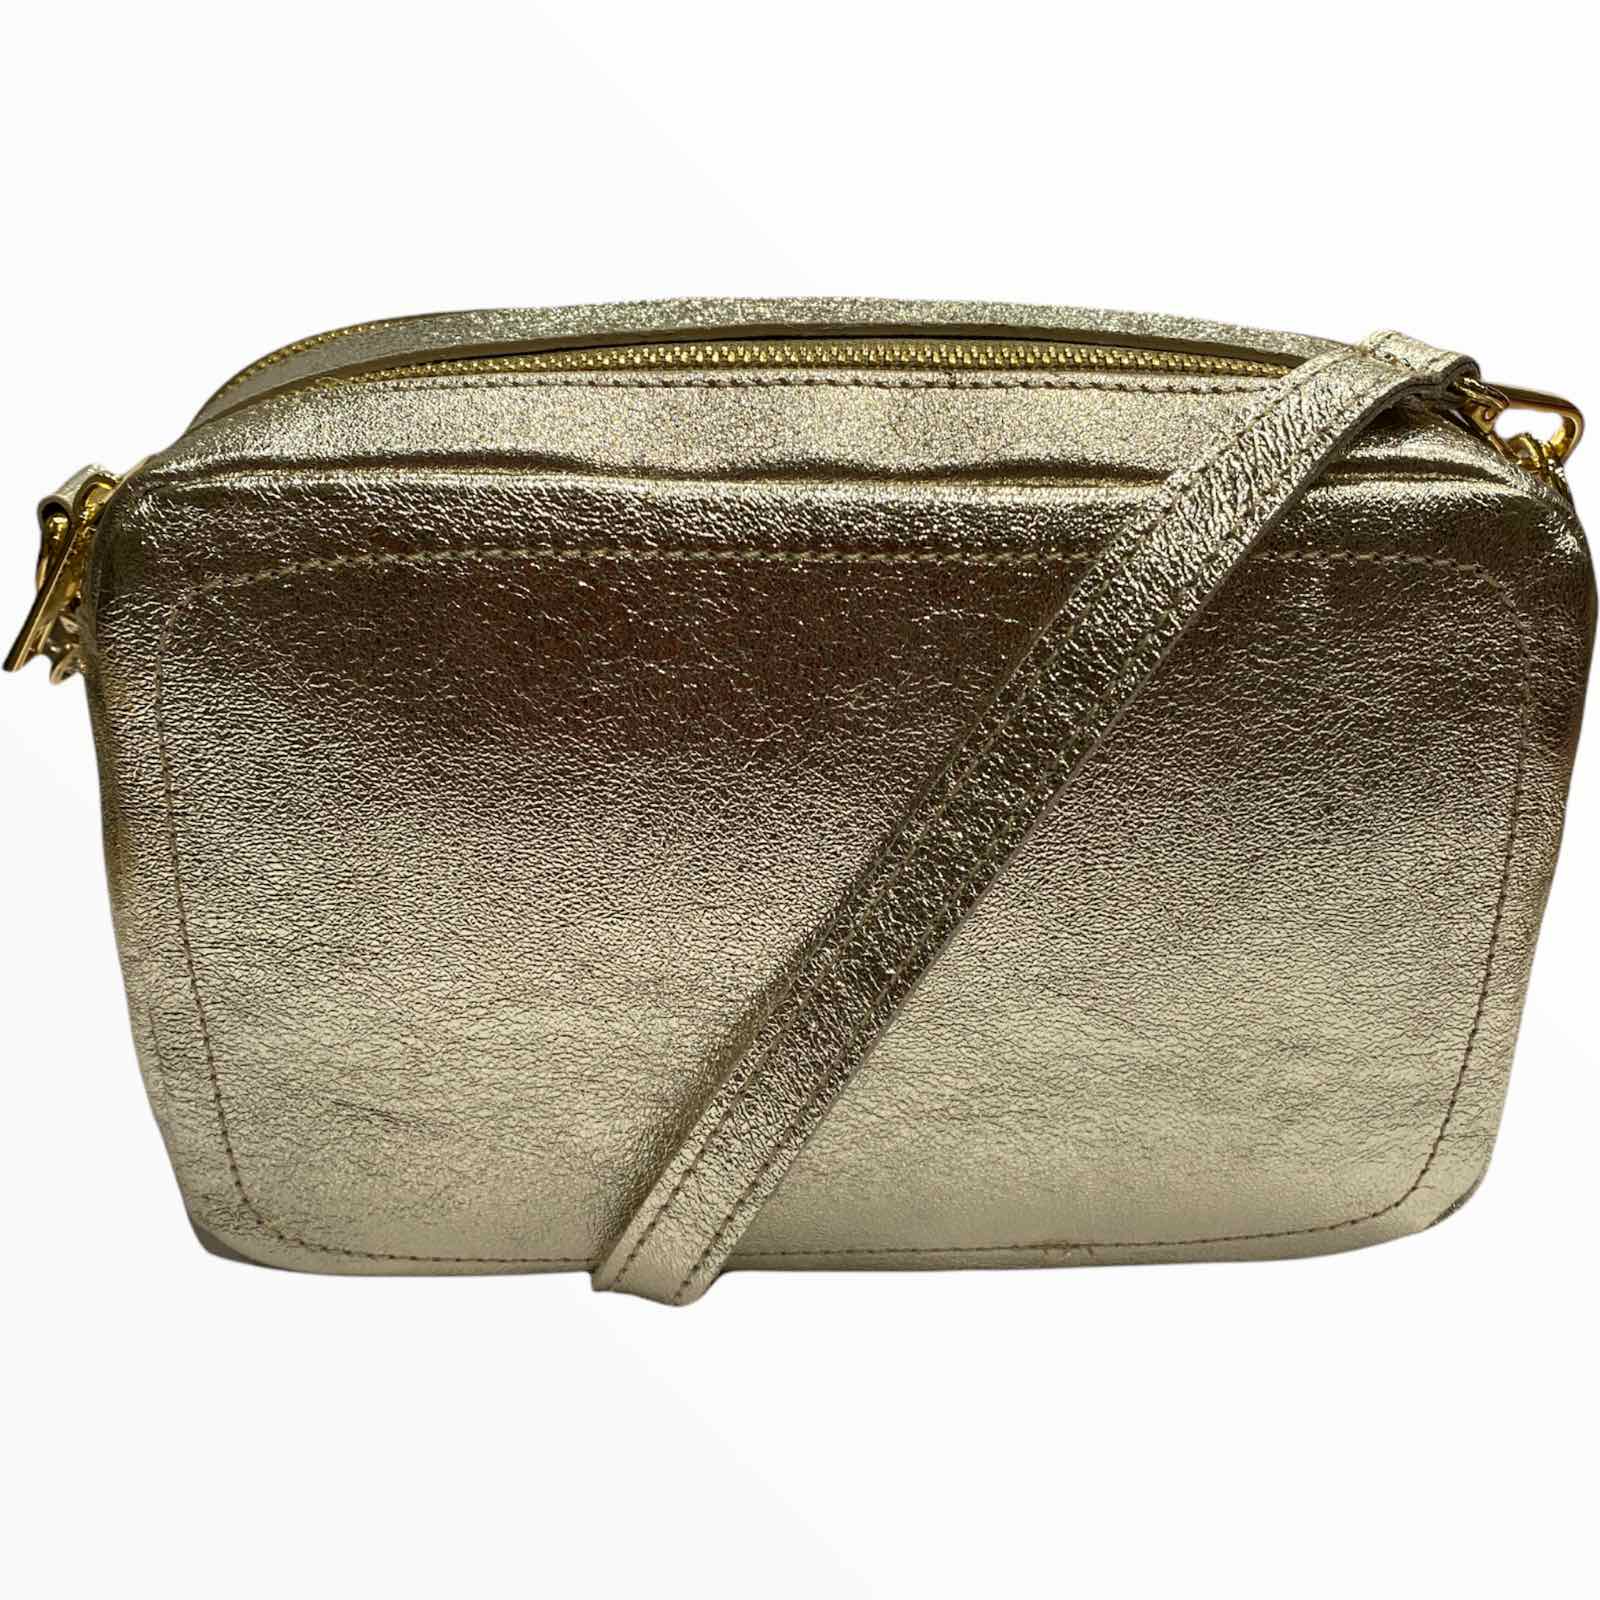 Gold luxury leather messenger bag